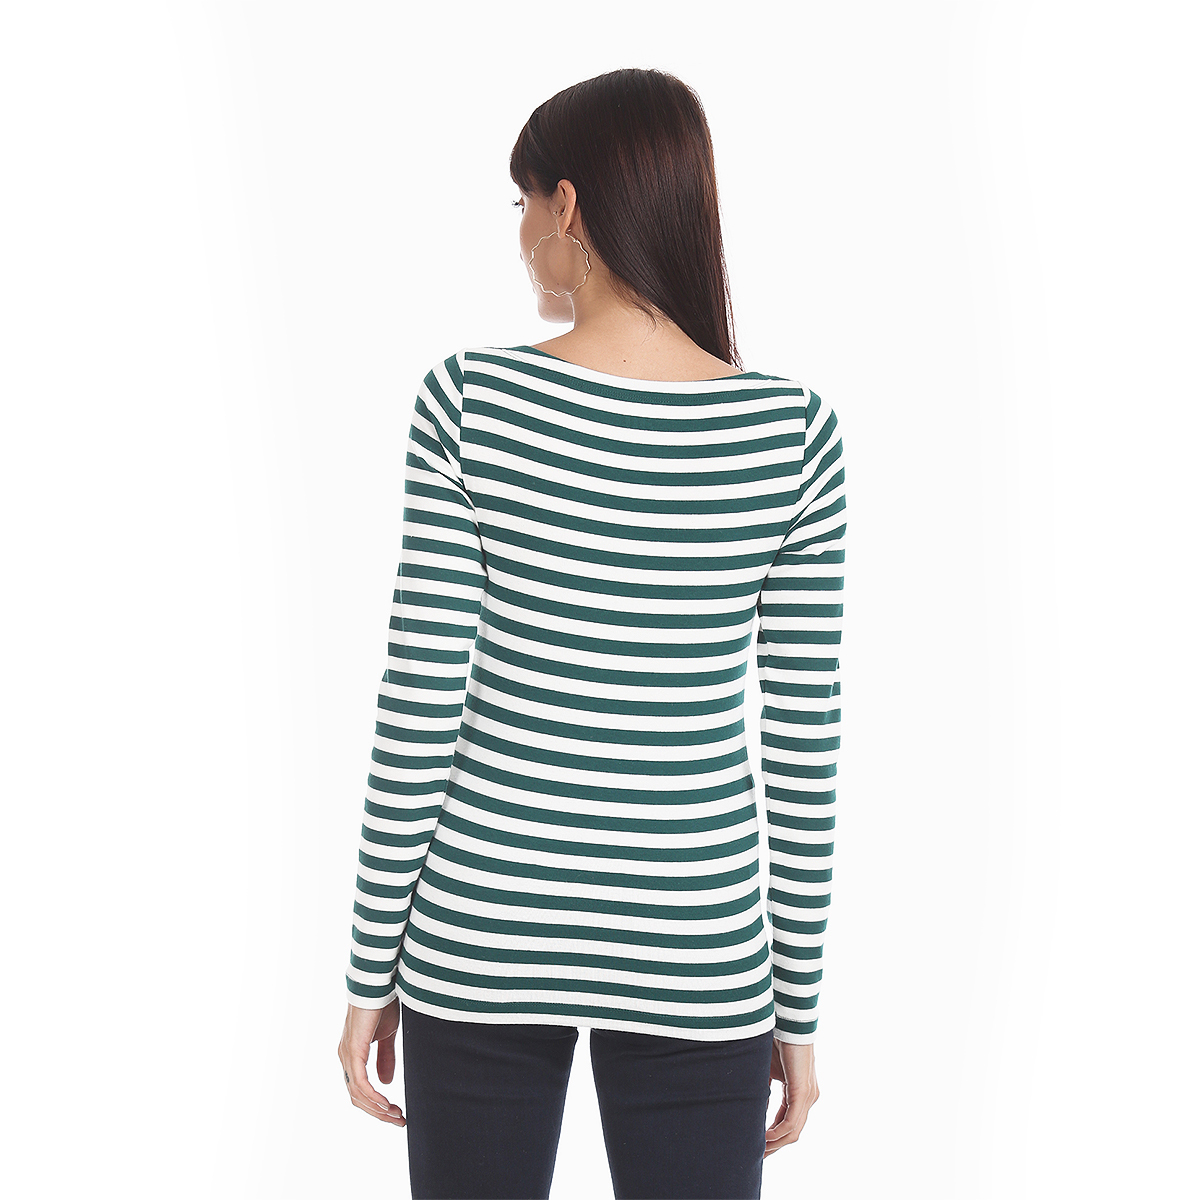 Gap Horizontal Striped Slim Fit Full Sleeve Boat Neck T-Shirt - Green